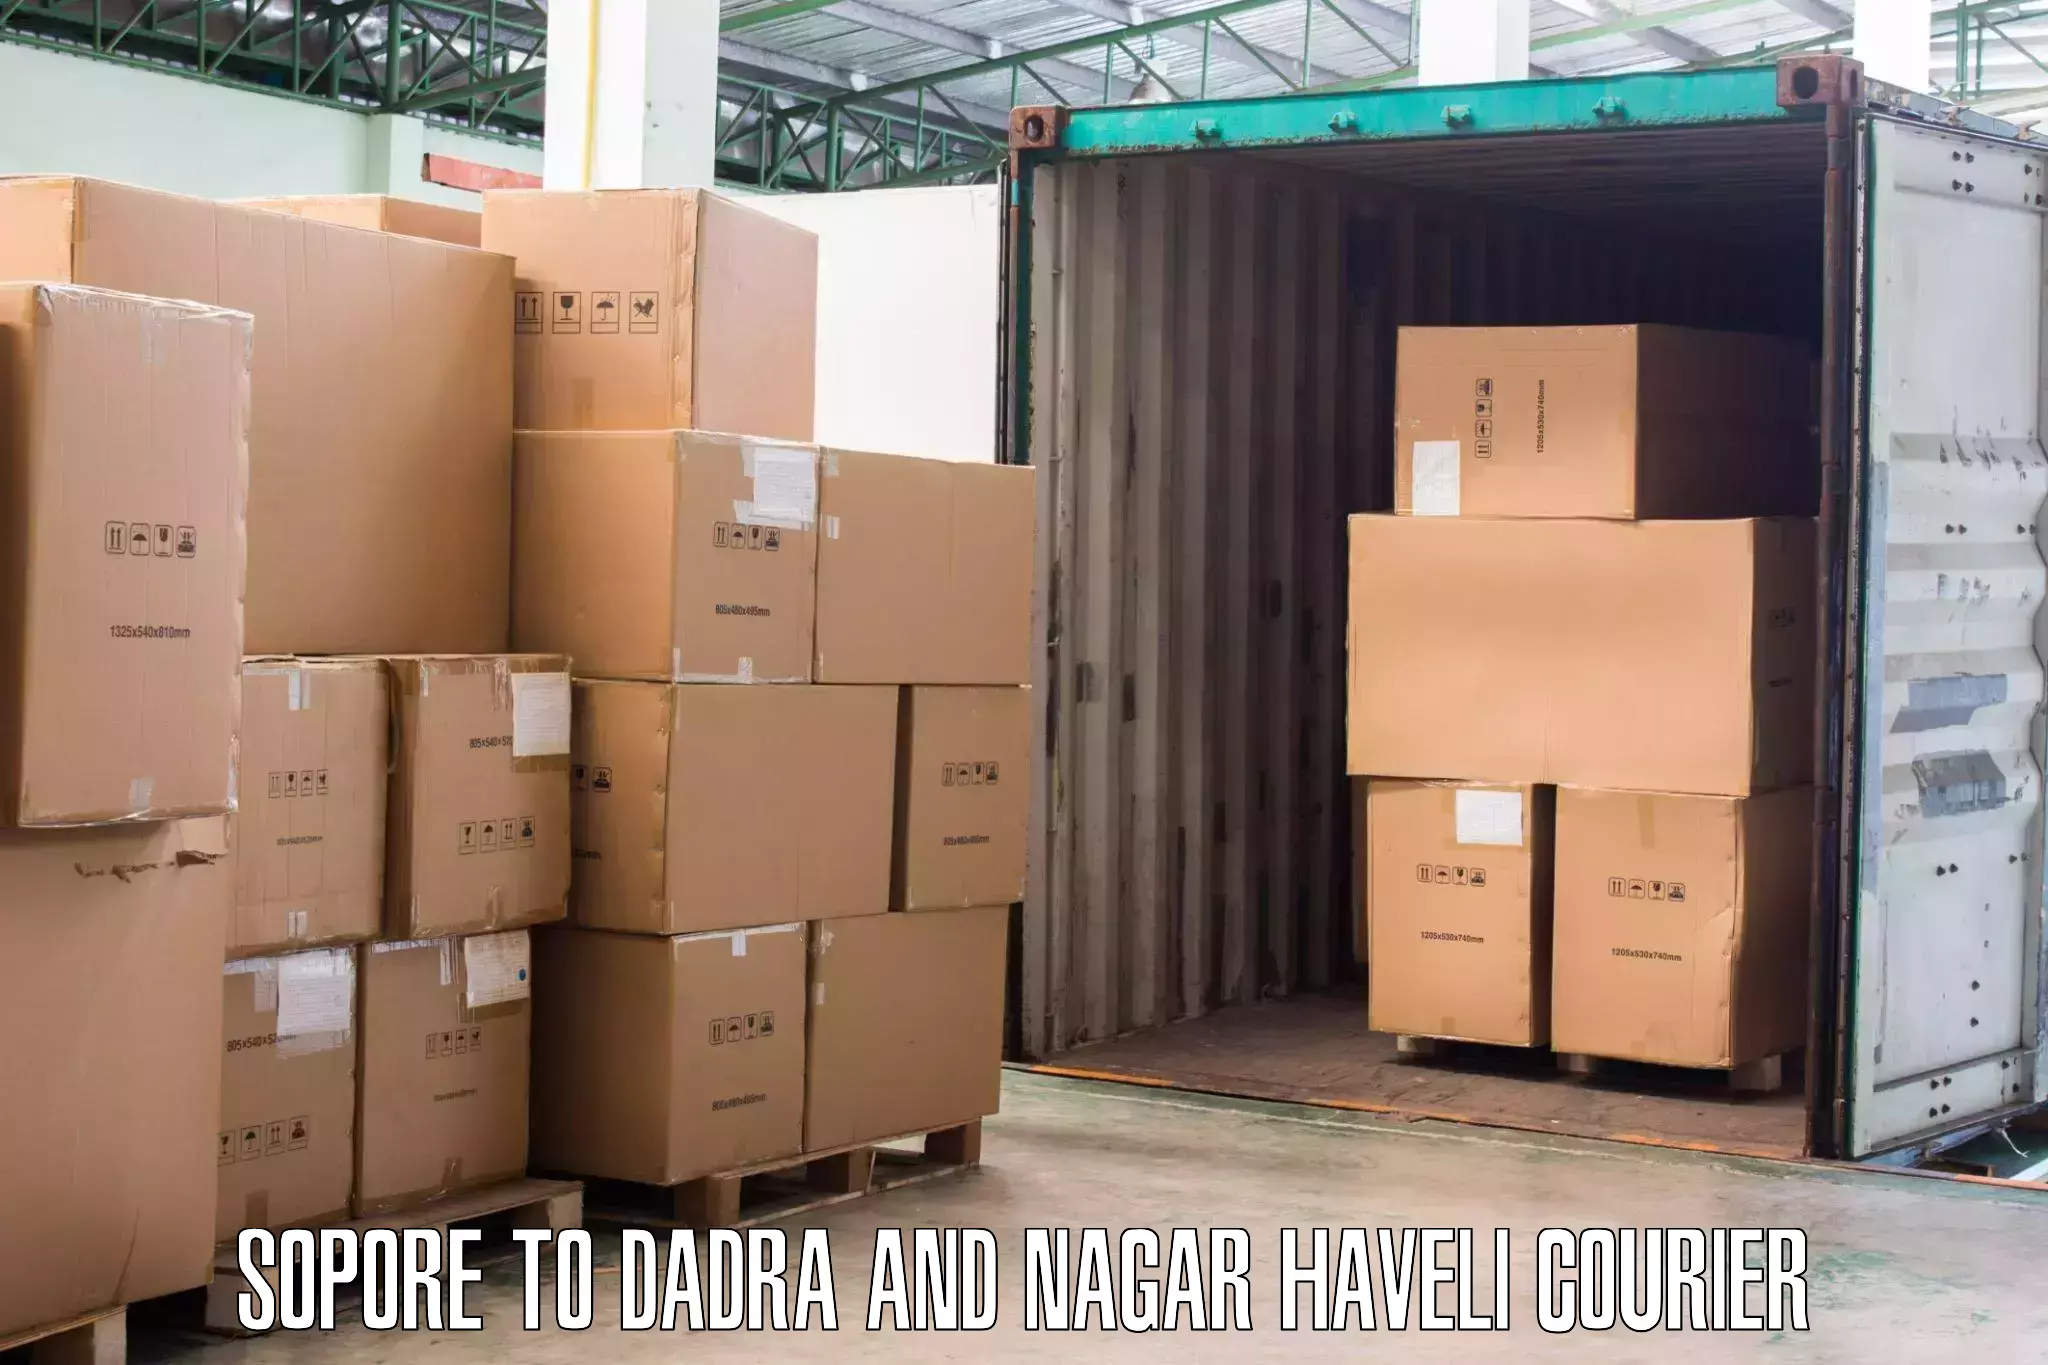 Home goods moving company Sopore to Silvassa